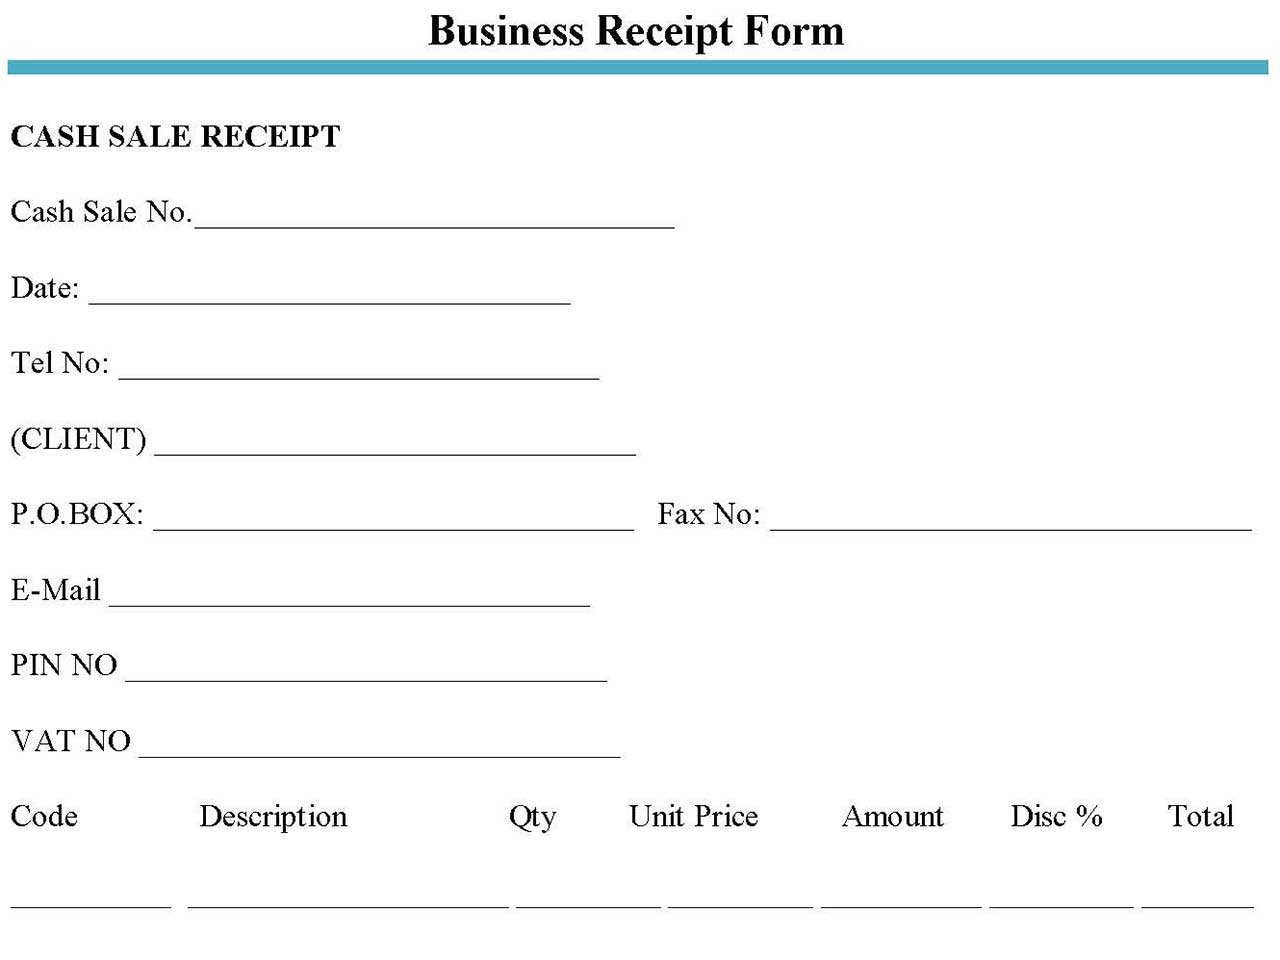 Business Receipt Form